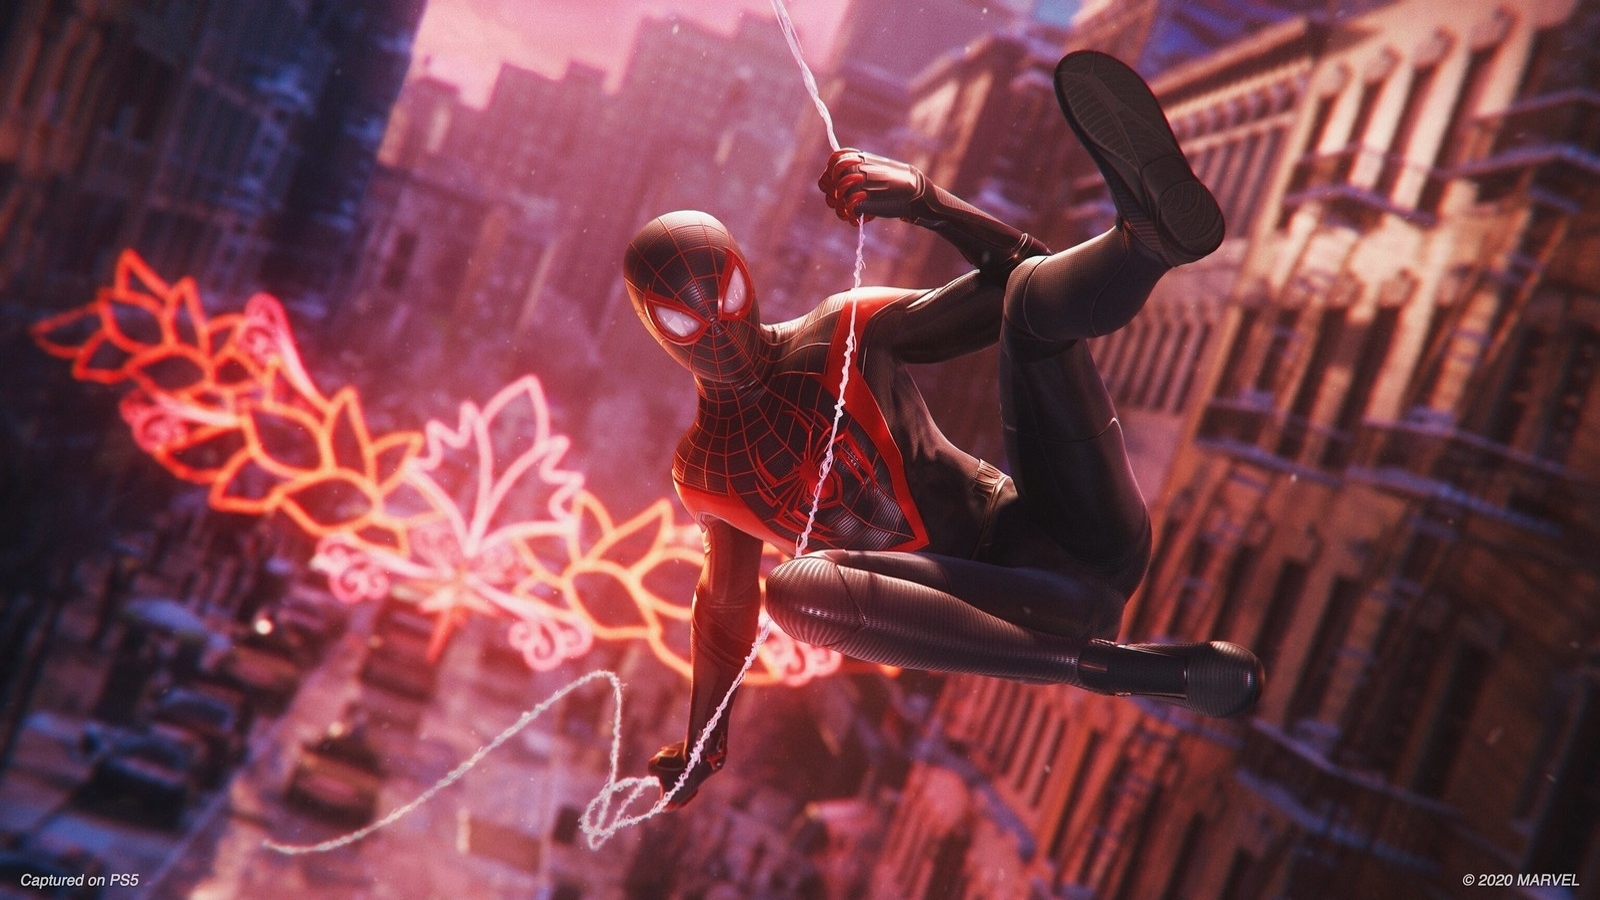 Spider-Man 2 PS5 Merch Confirms Multiverse Plot in Game (Update)